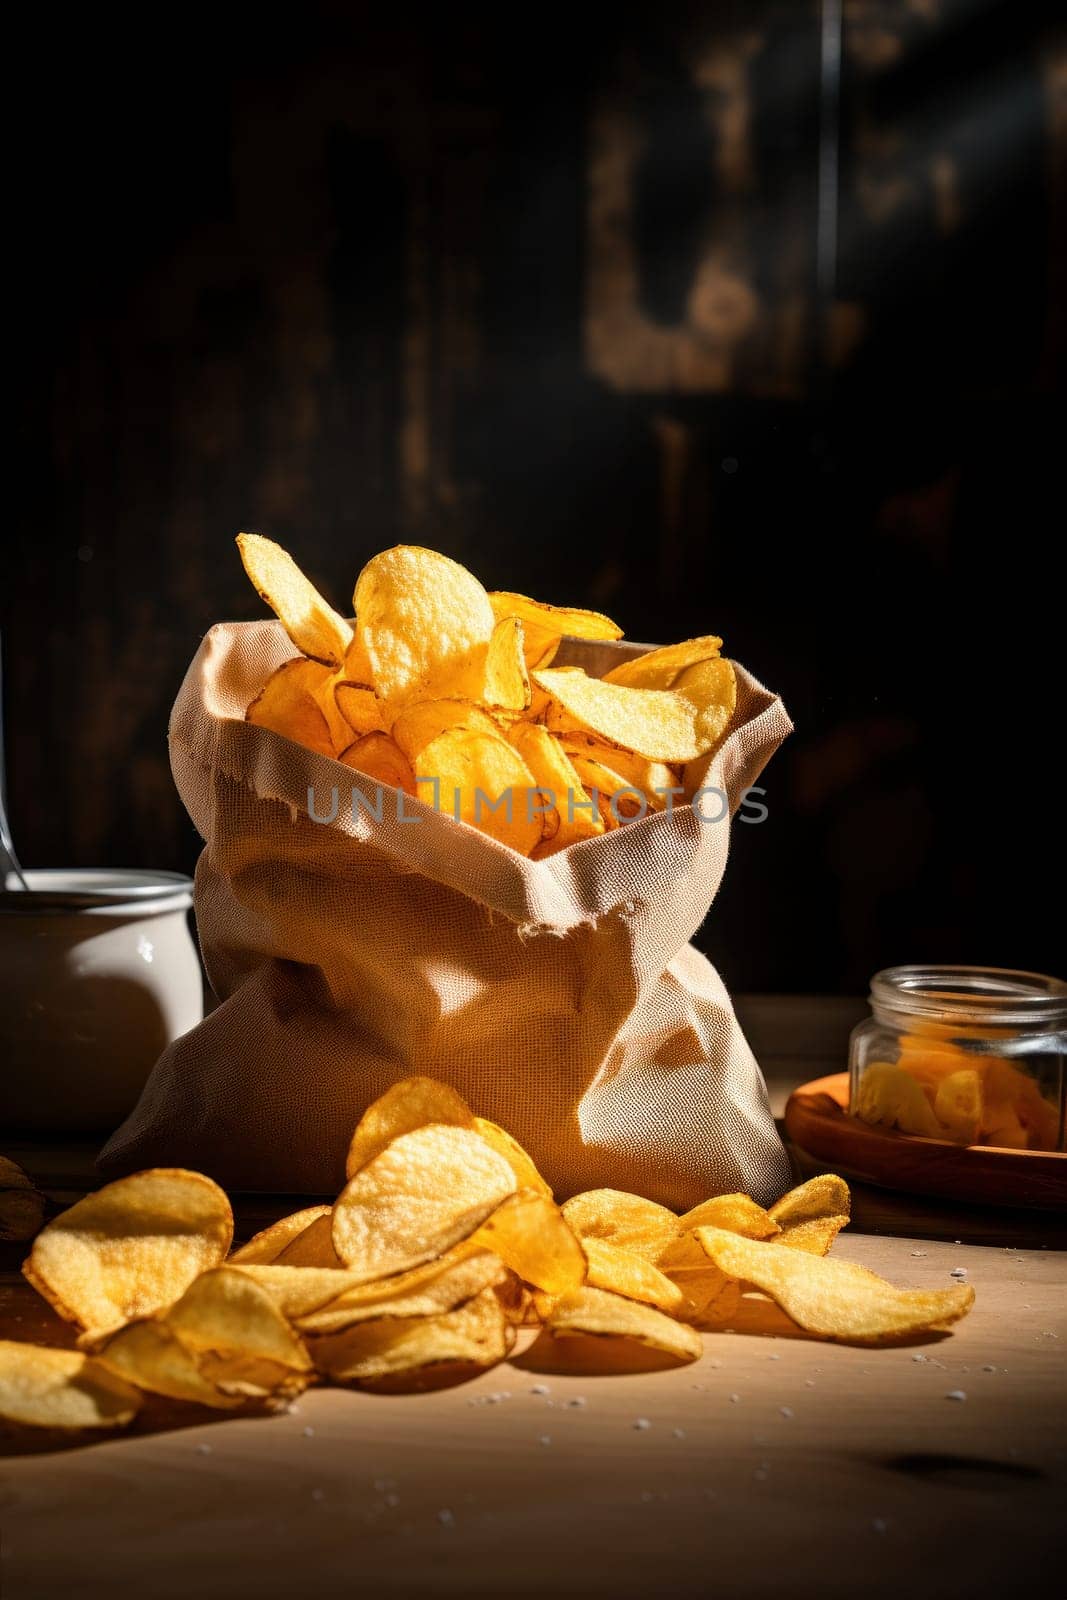 Crispy, Delicious Fried Potato Chips by Suteren